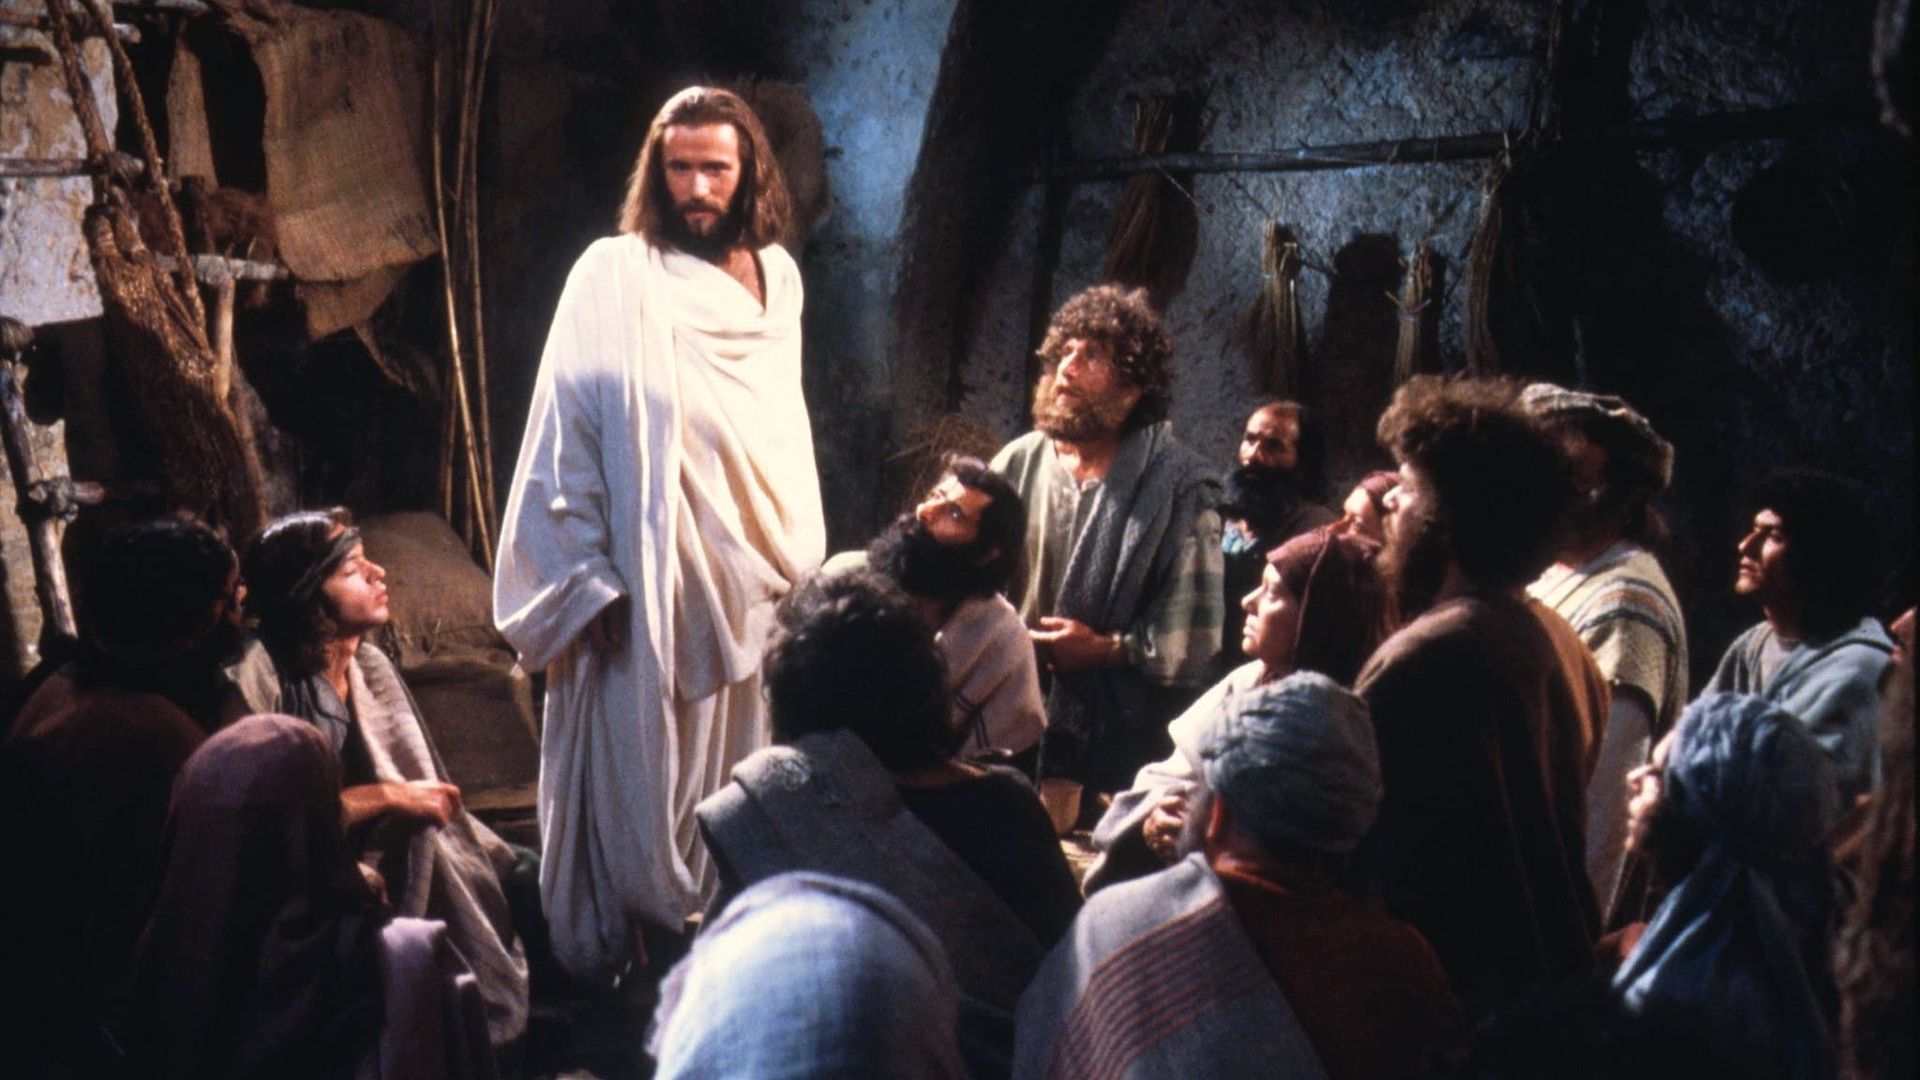 The Jesus Film background